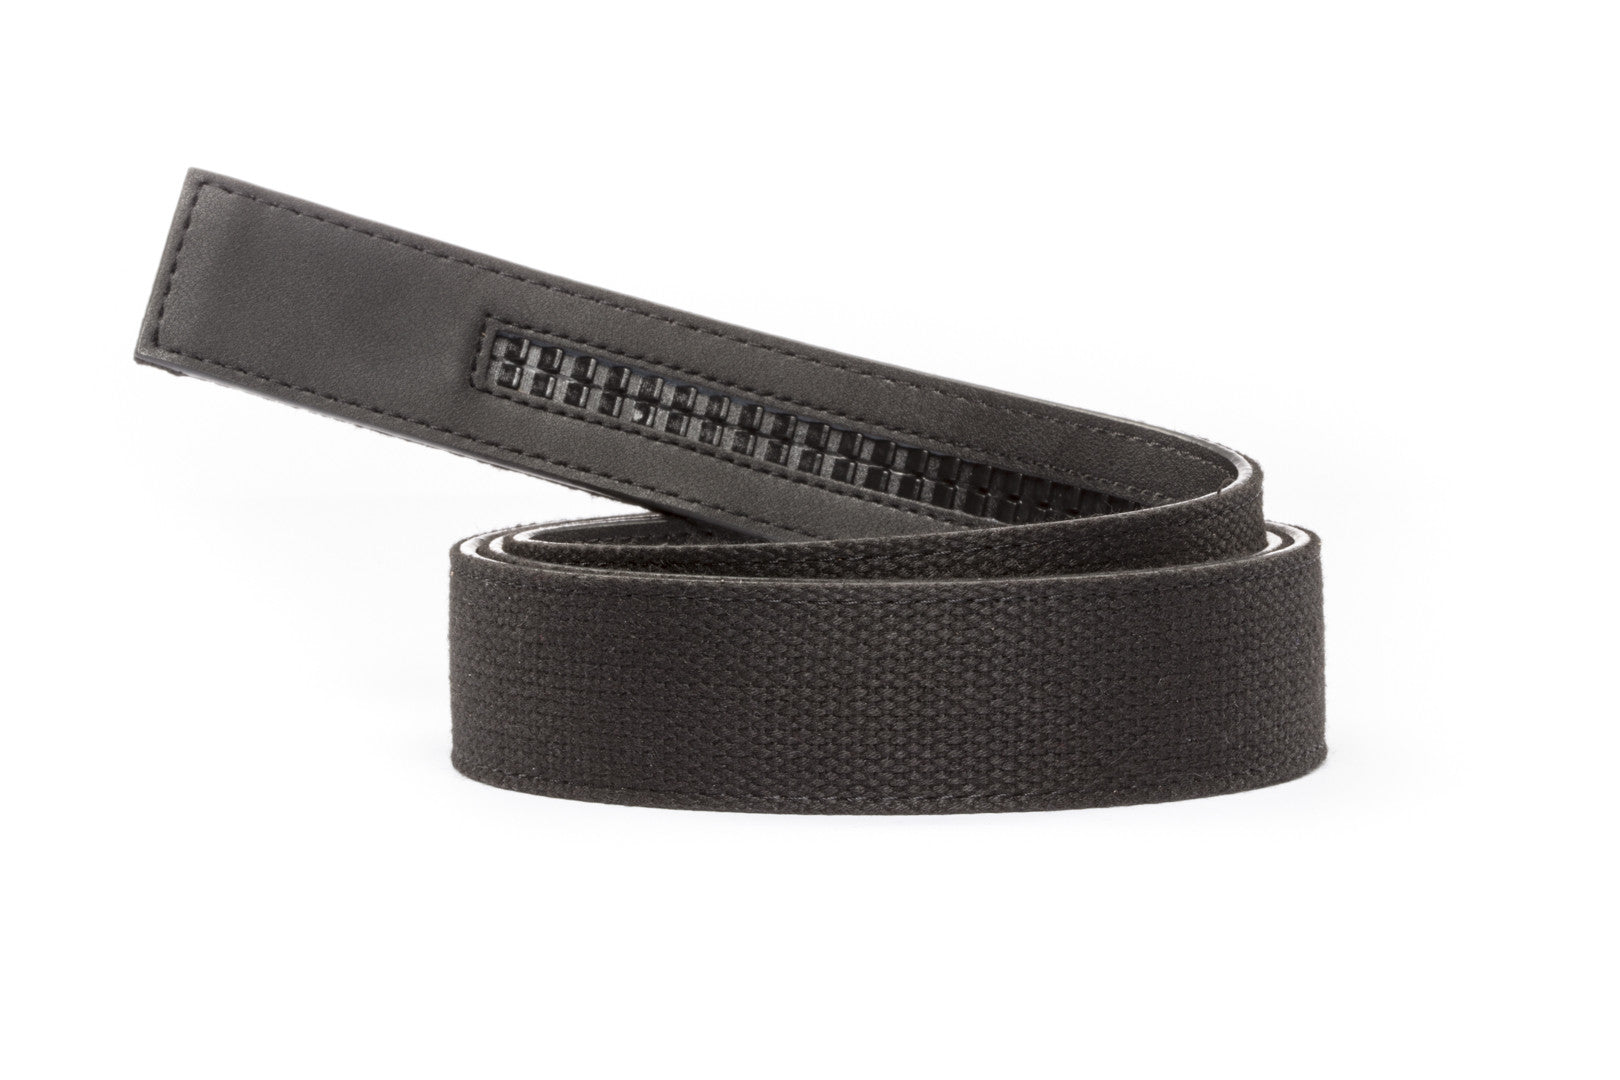 XL Canvas Belt Strap - Men's Ratchet Belt - Black, 1.5